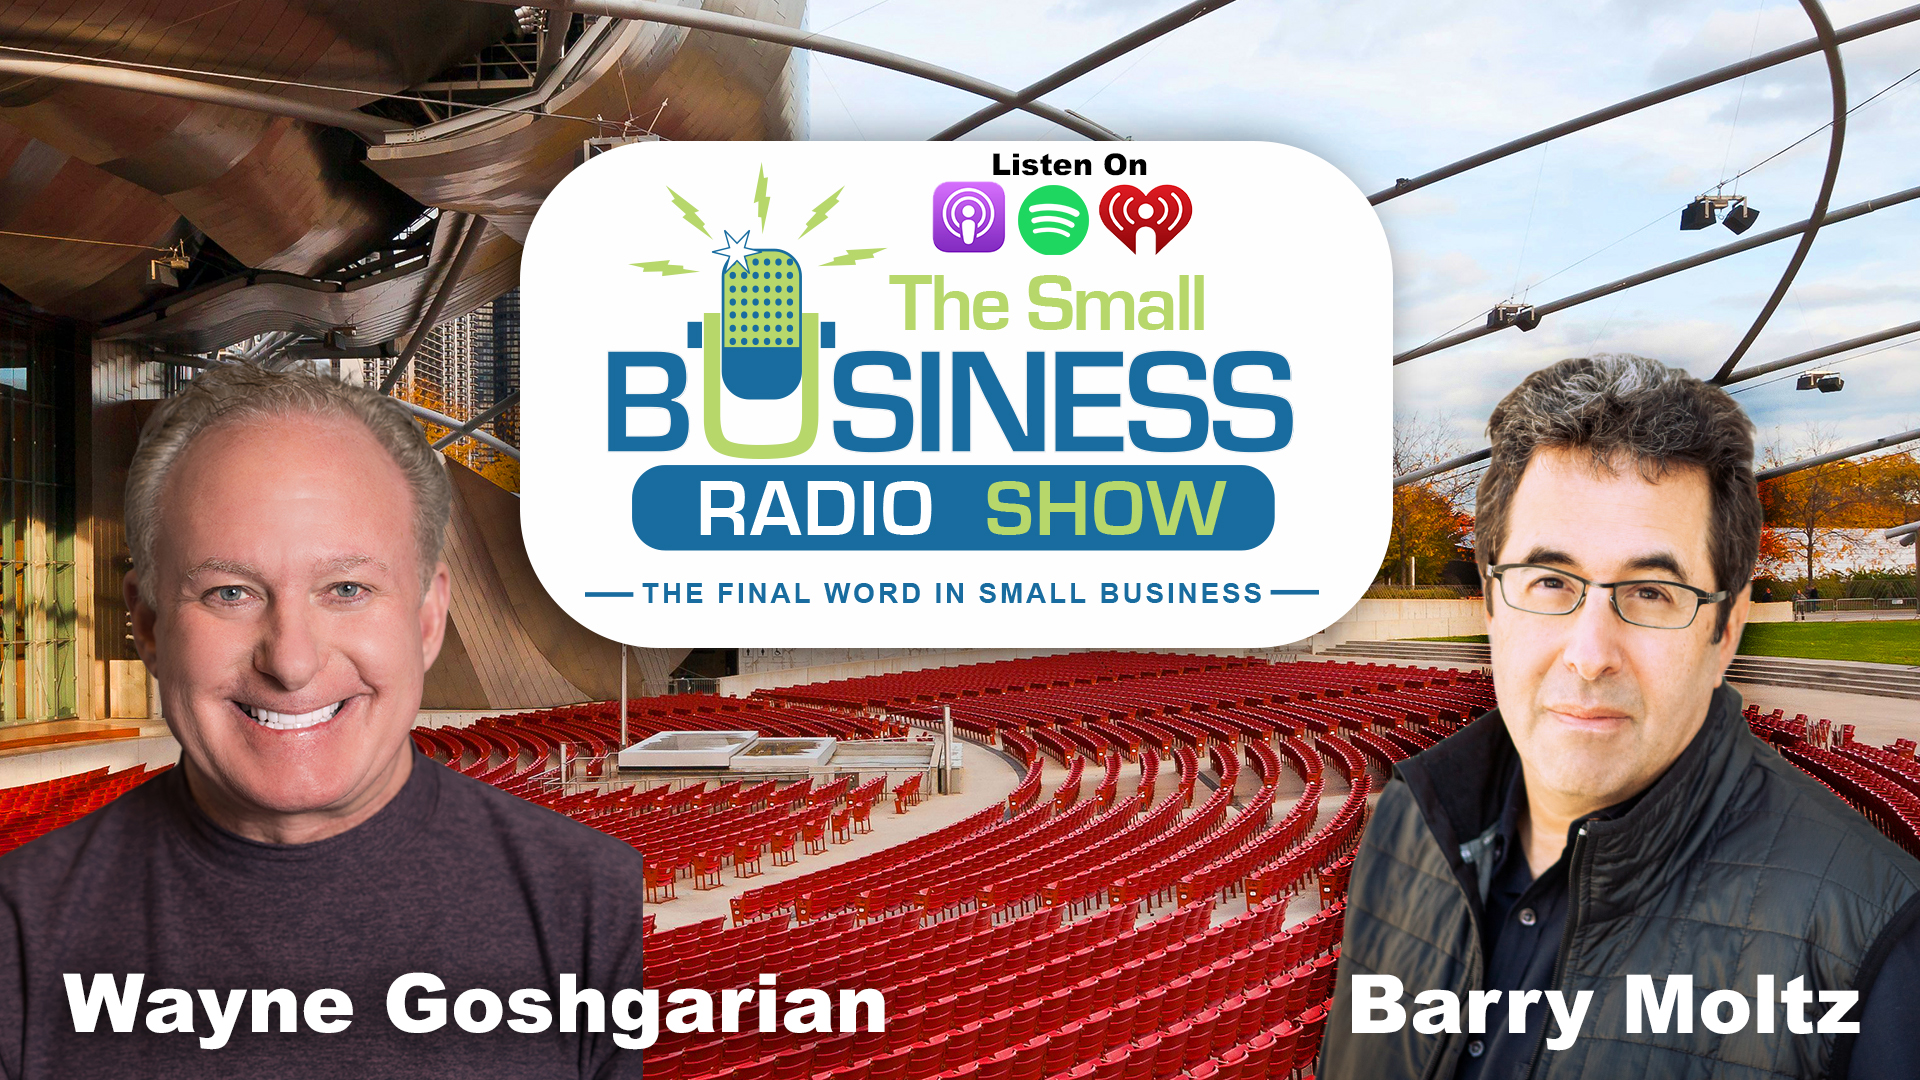 Wayne Goshgarian on The Small Business Radio Show